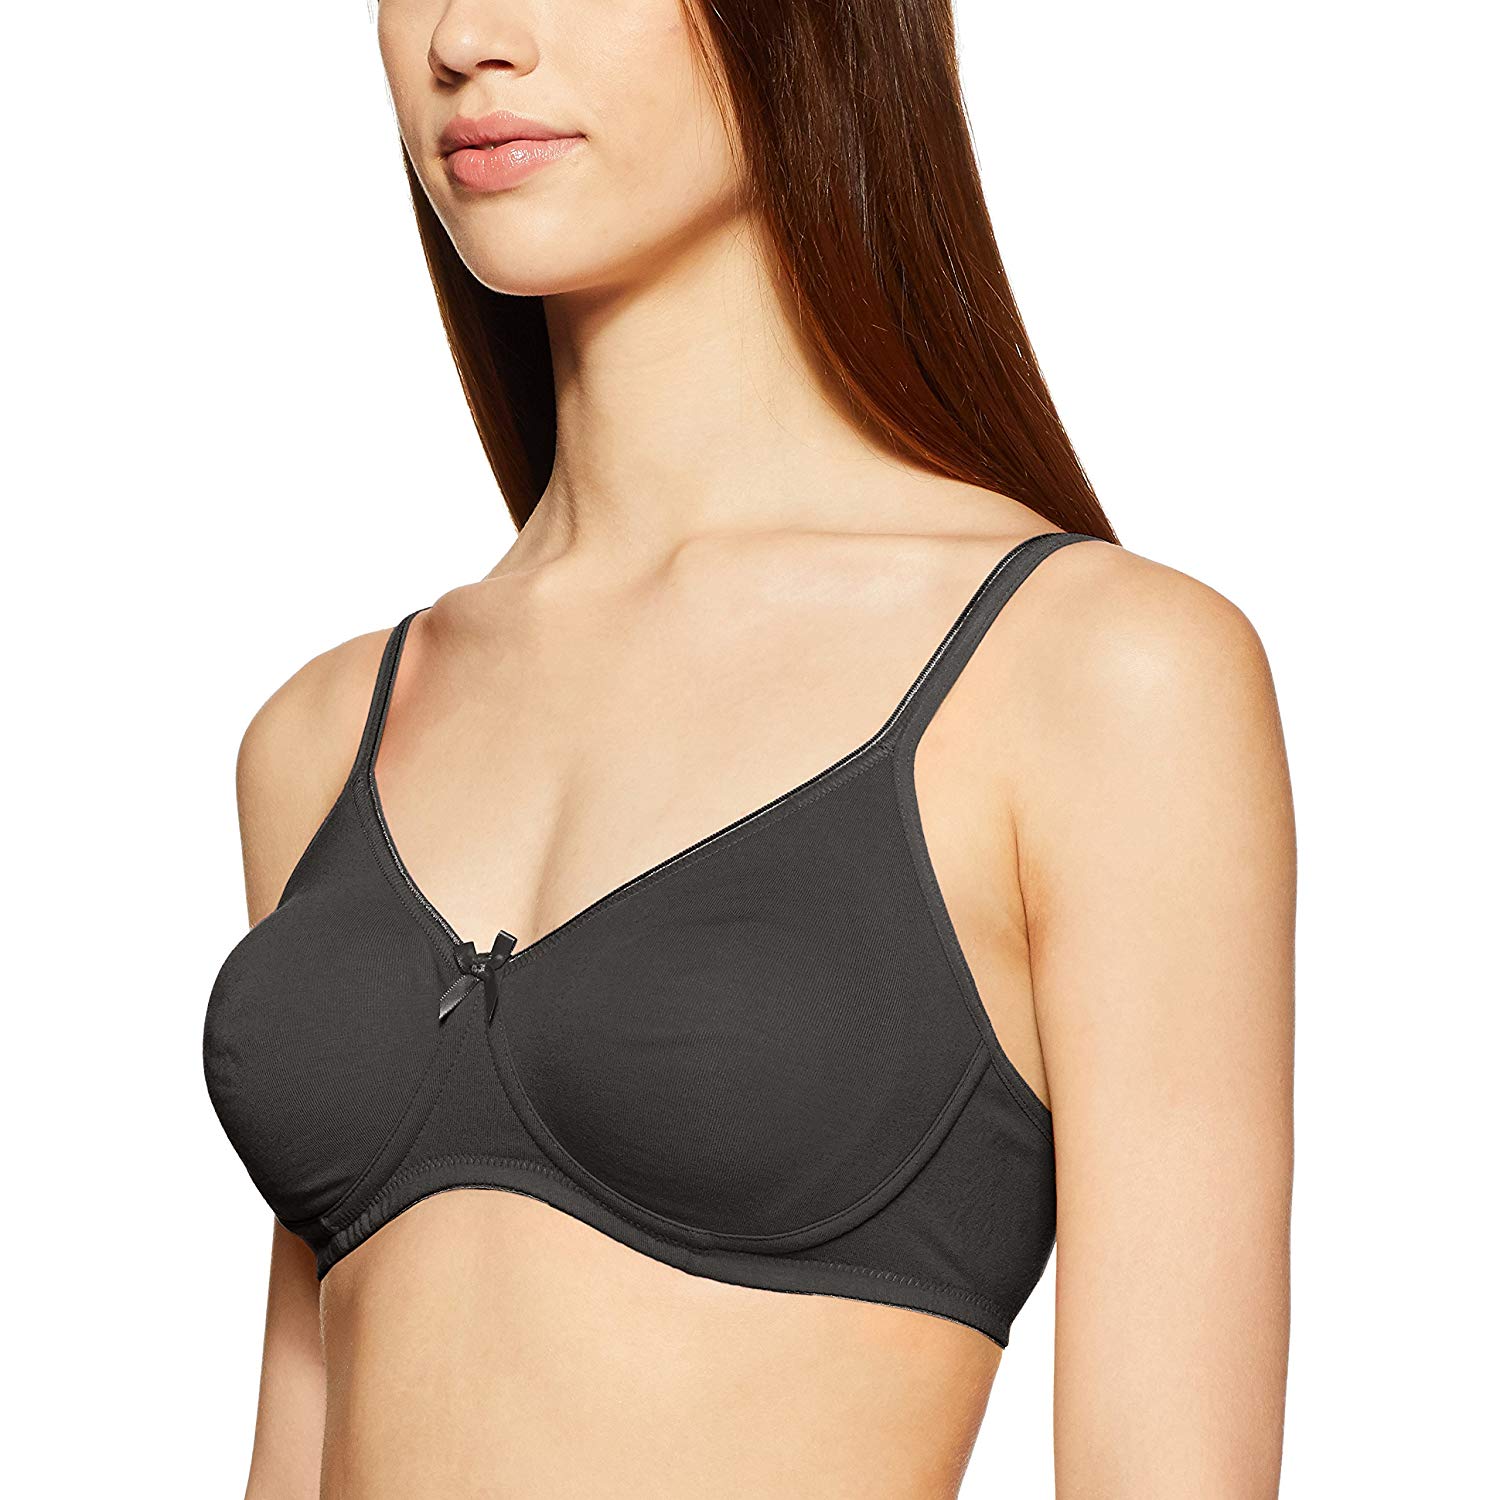 Buy Seamless Jockey bra Style # 1722 Secret Shaper (B, Skin, 36) at